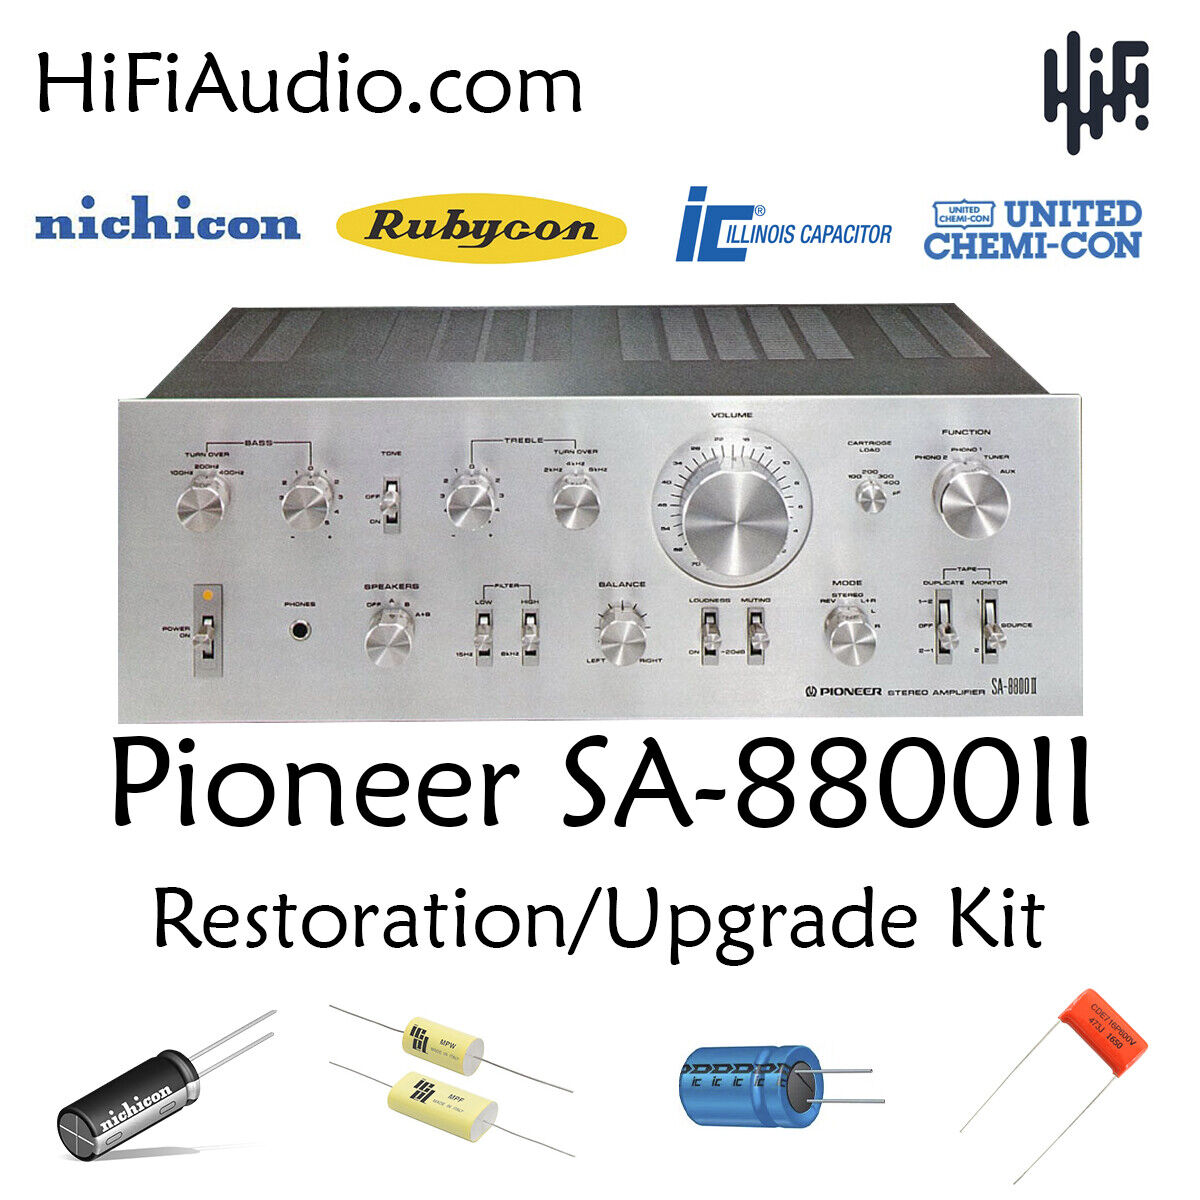 Buy Pioneer SA-8800 II restoration kit - HiFi Audio